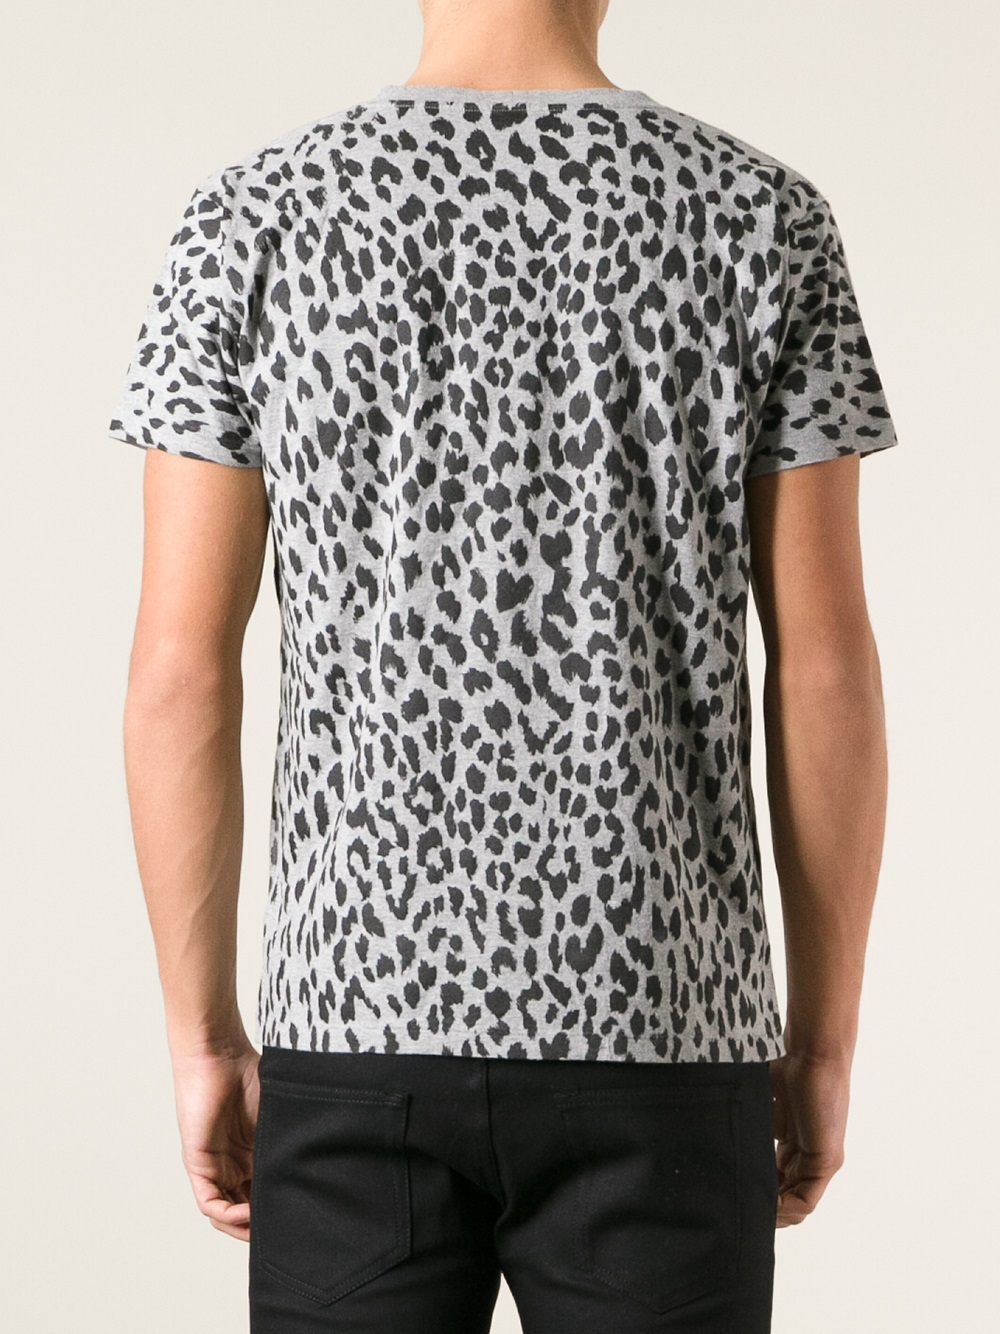 Lyst - Saint Laurent Leopard Print Tshirt in Gray for Men